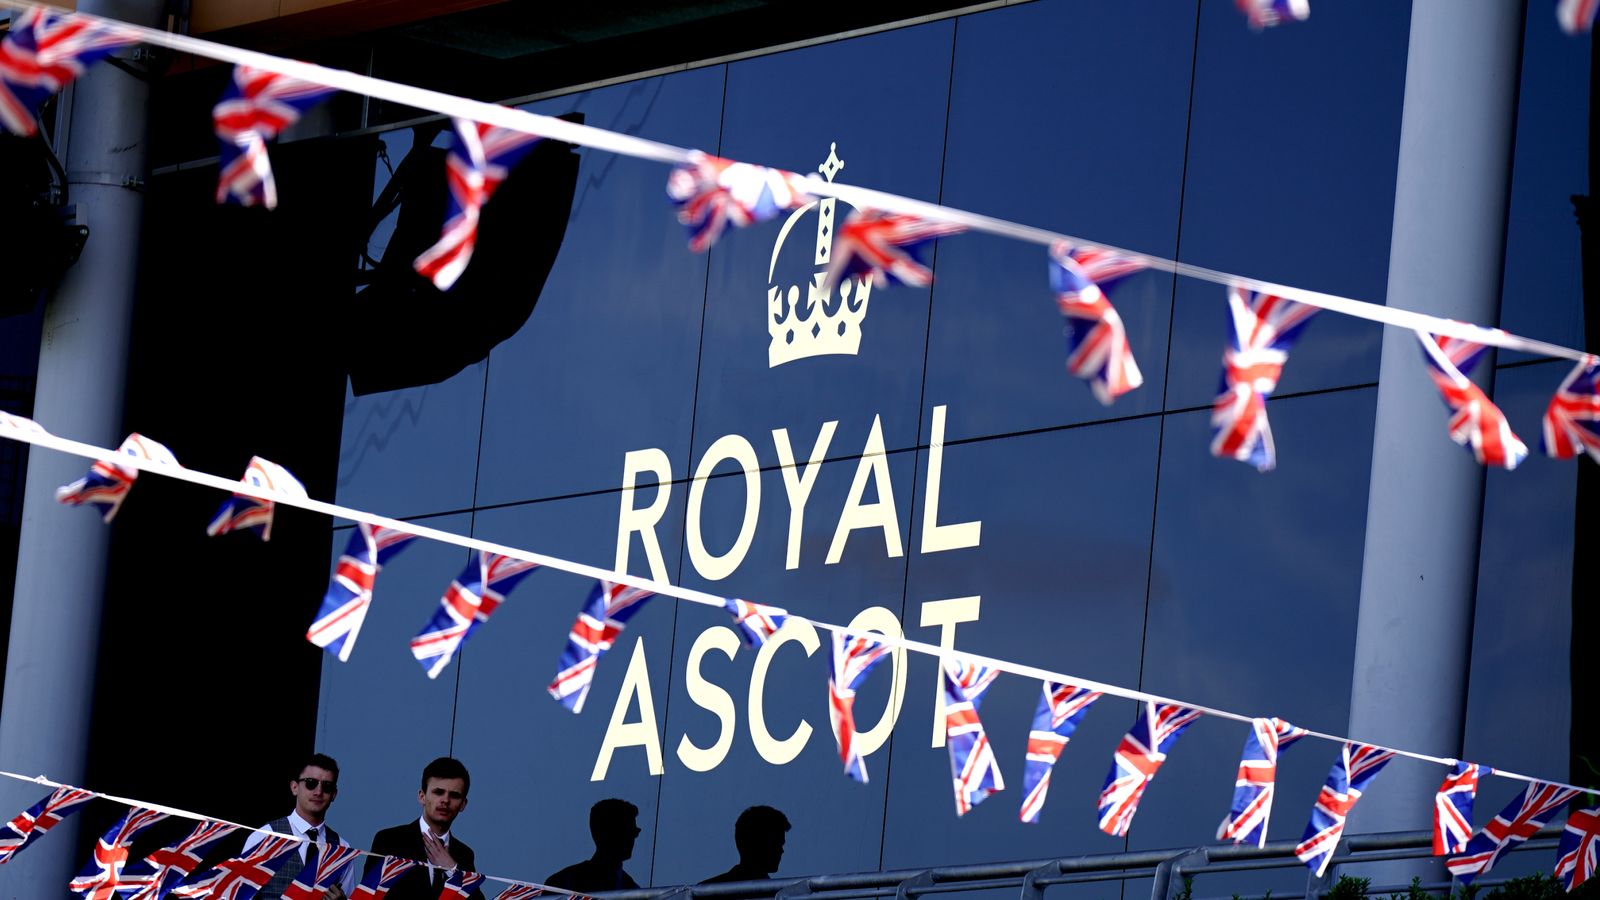 Royal Ascot: Racing stars Baaeed, Golden Pal and Coroebus headline opening day of Royal Meeting